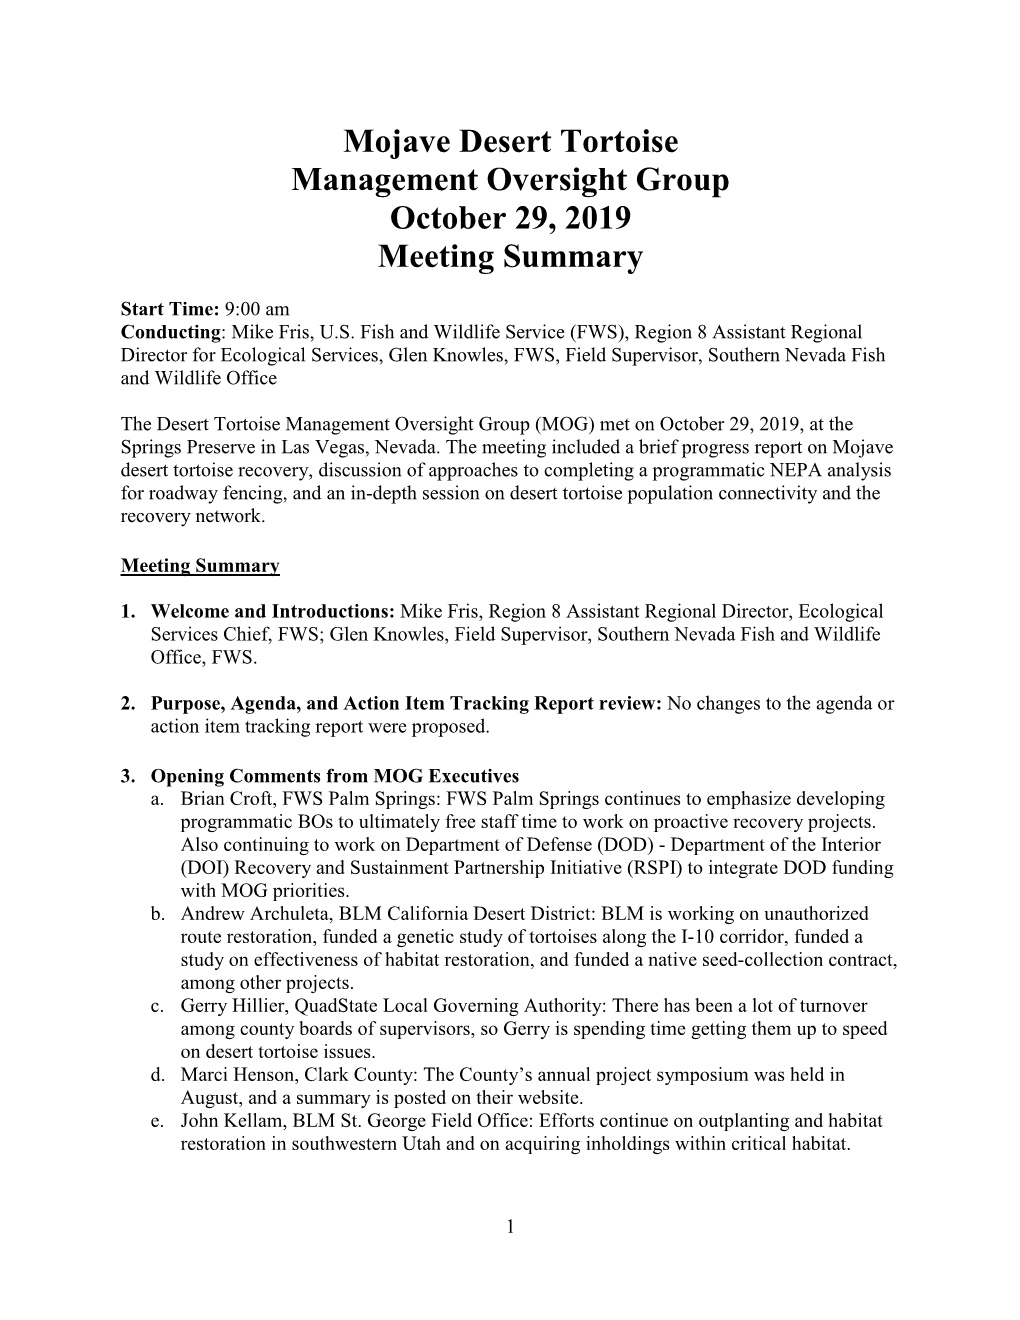 Mojave Desert Tortoise Management Oversight Group October 29, 2019 Meeting Summary